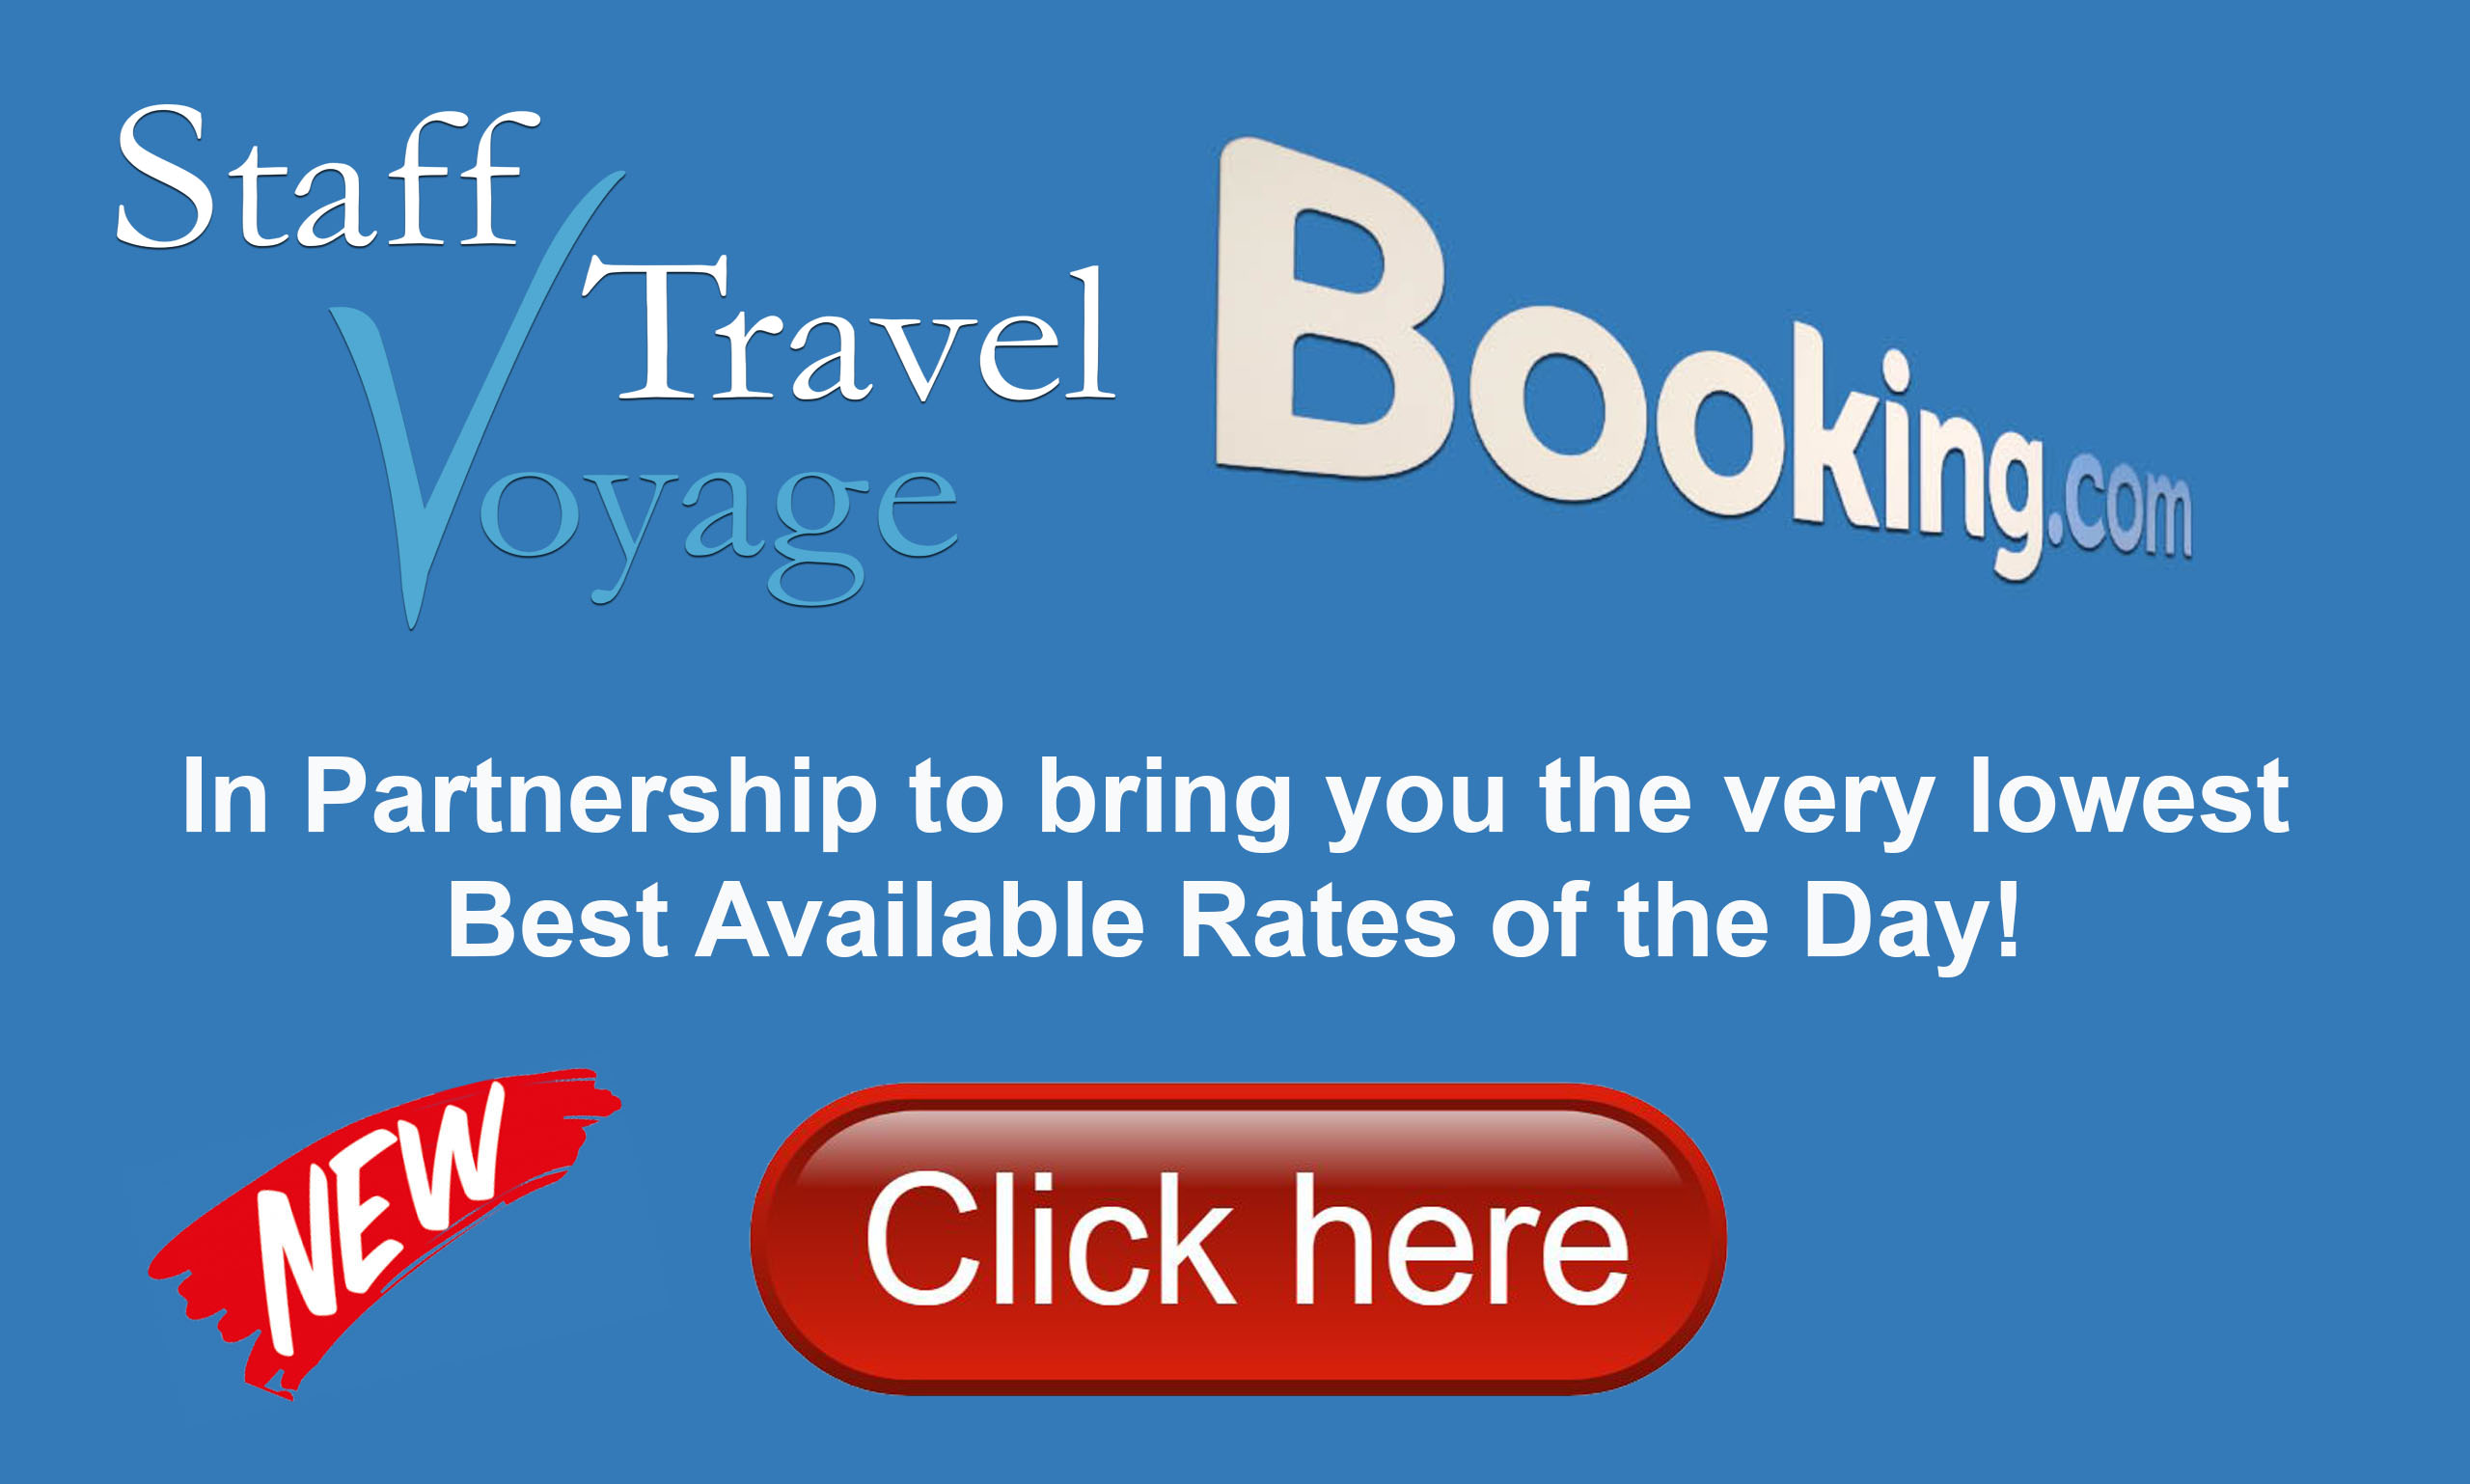 staff travel voyage log in